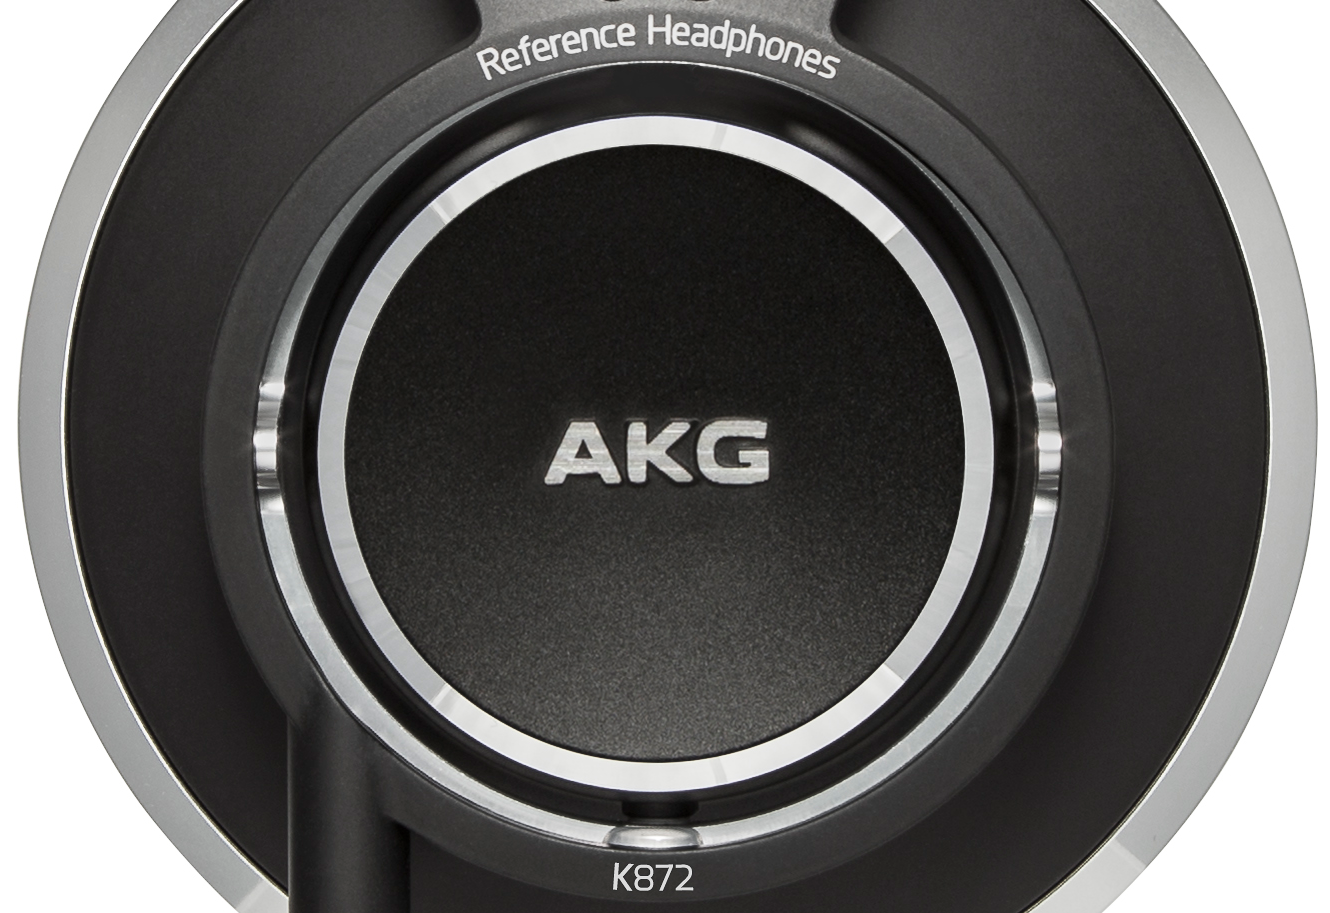 AKG K 52 auricular cerrado baja impedancia economico